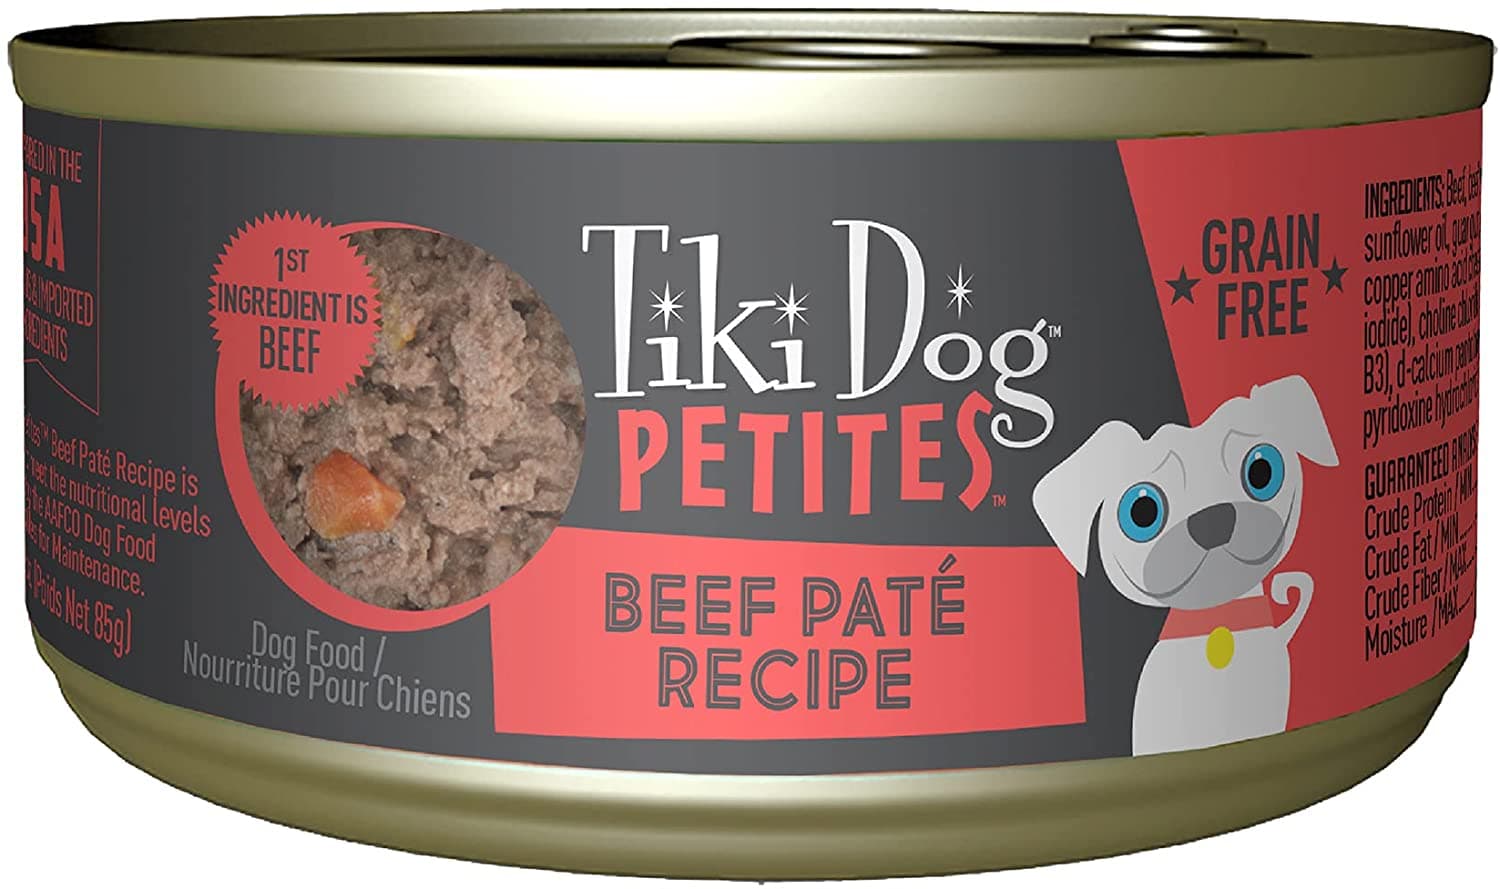 Tiki Dog Aloha Petites Wet Dog Food Paté Beef3 Oz. Can